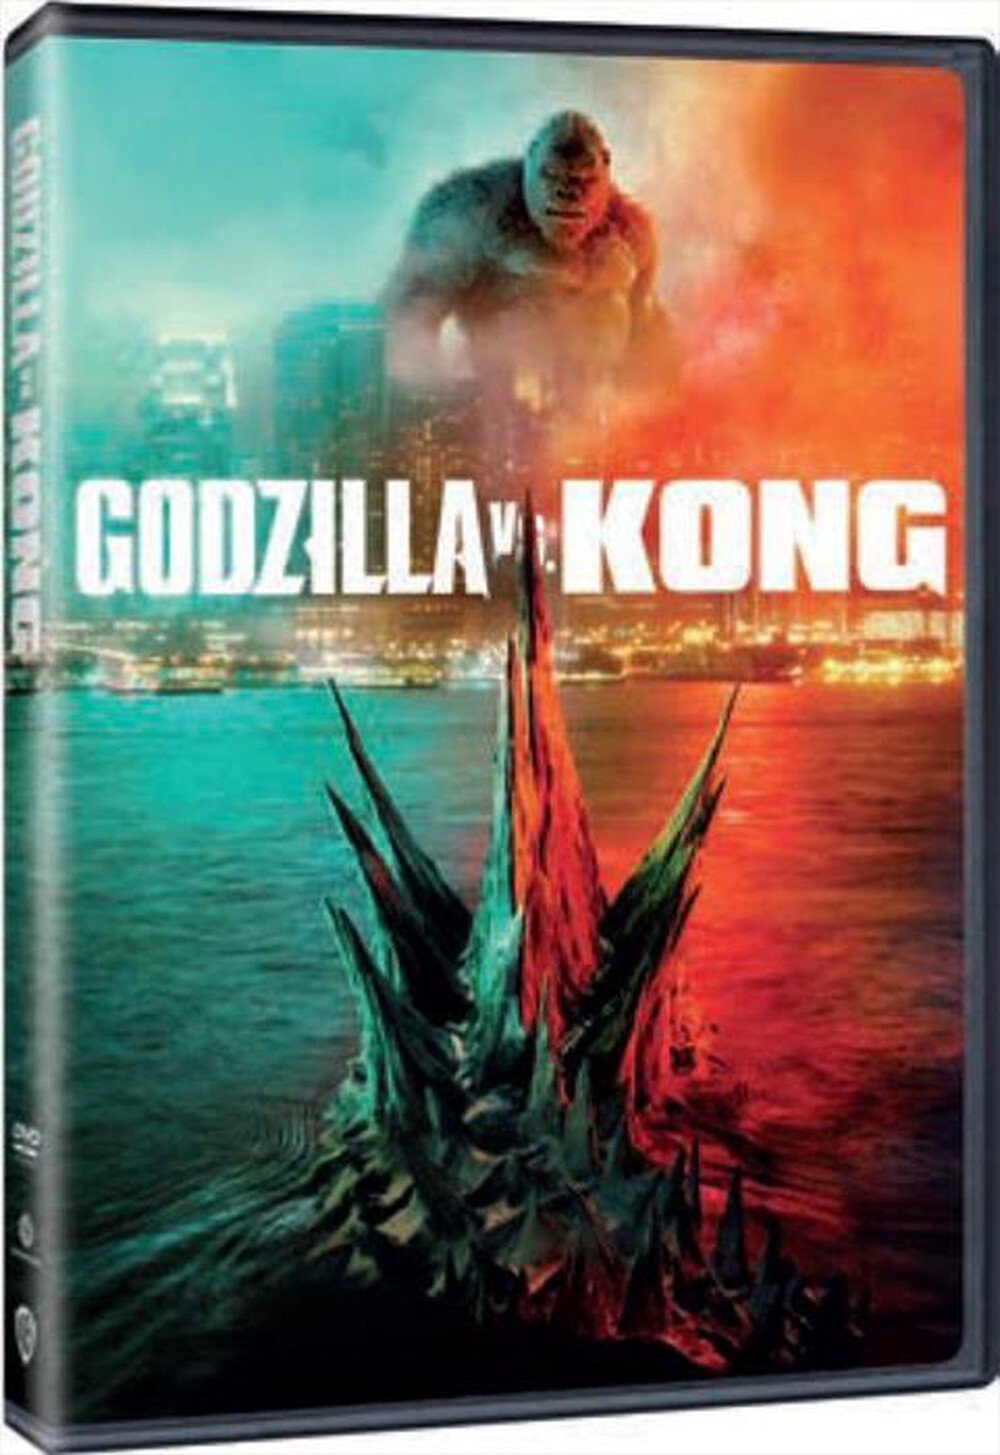 "WARNER HOME VIDEO - Godzilla Vs Kong"